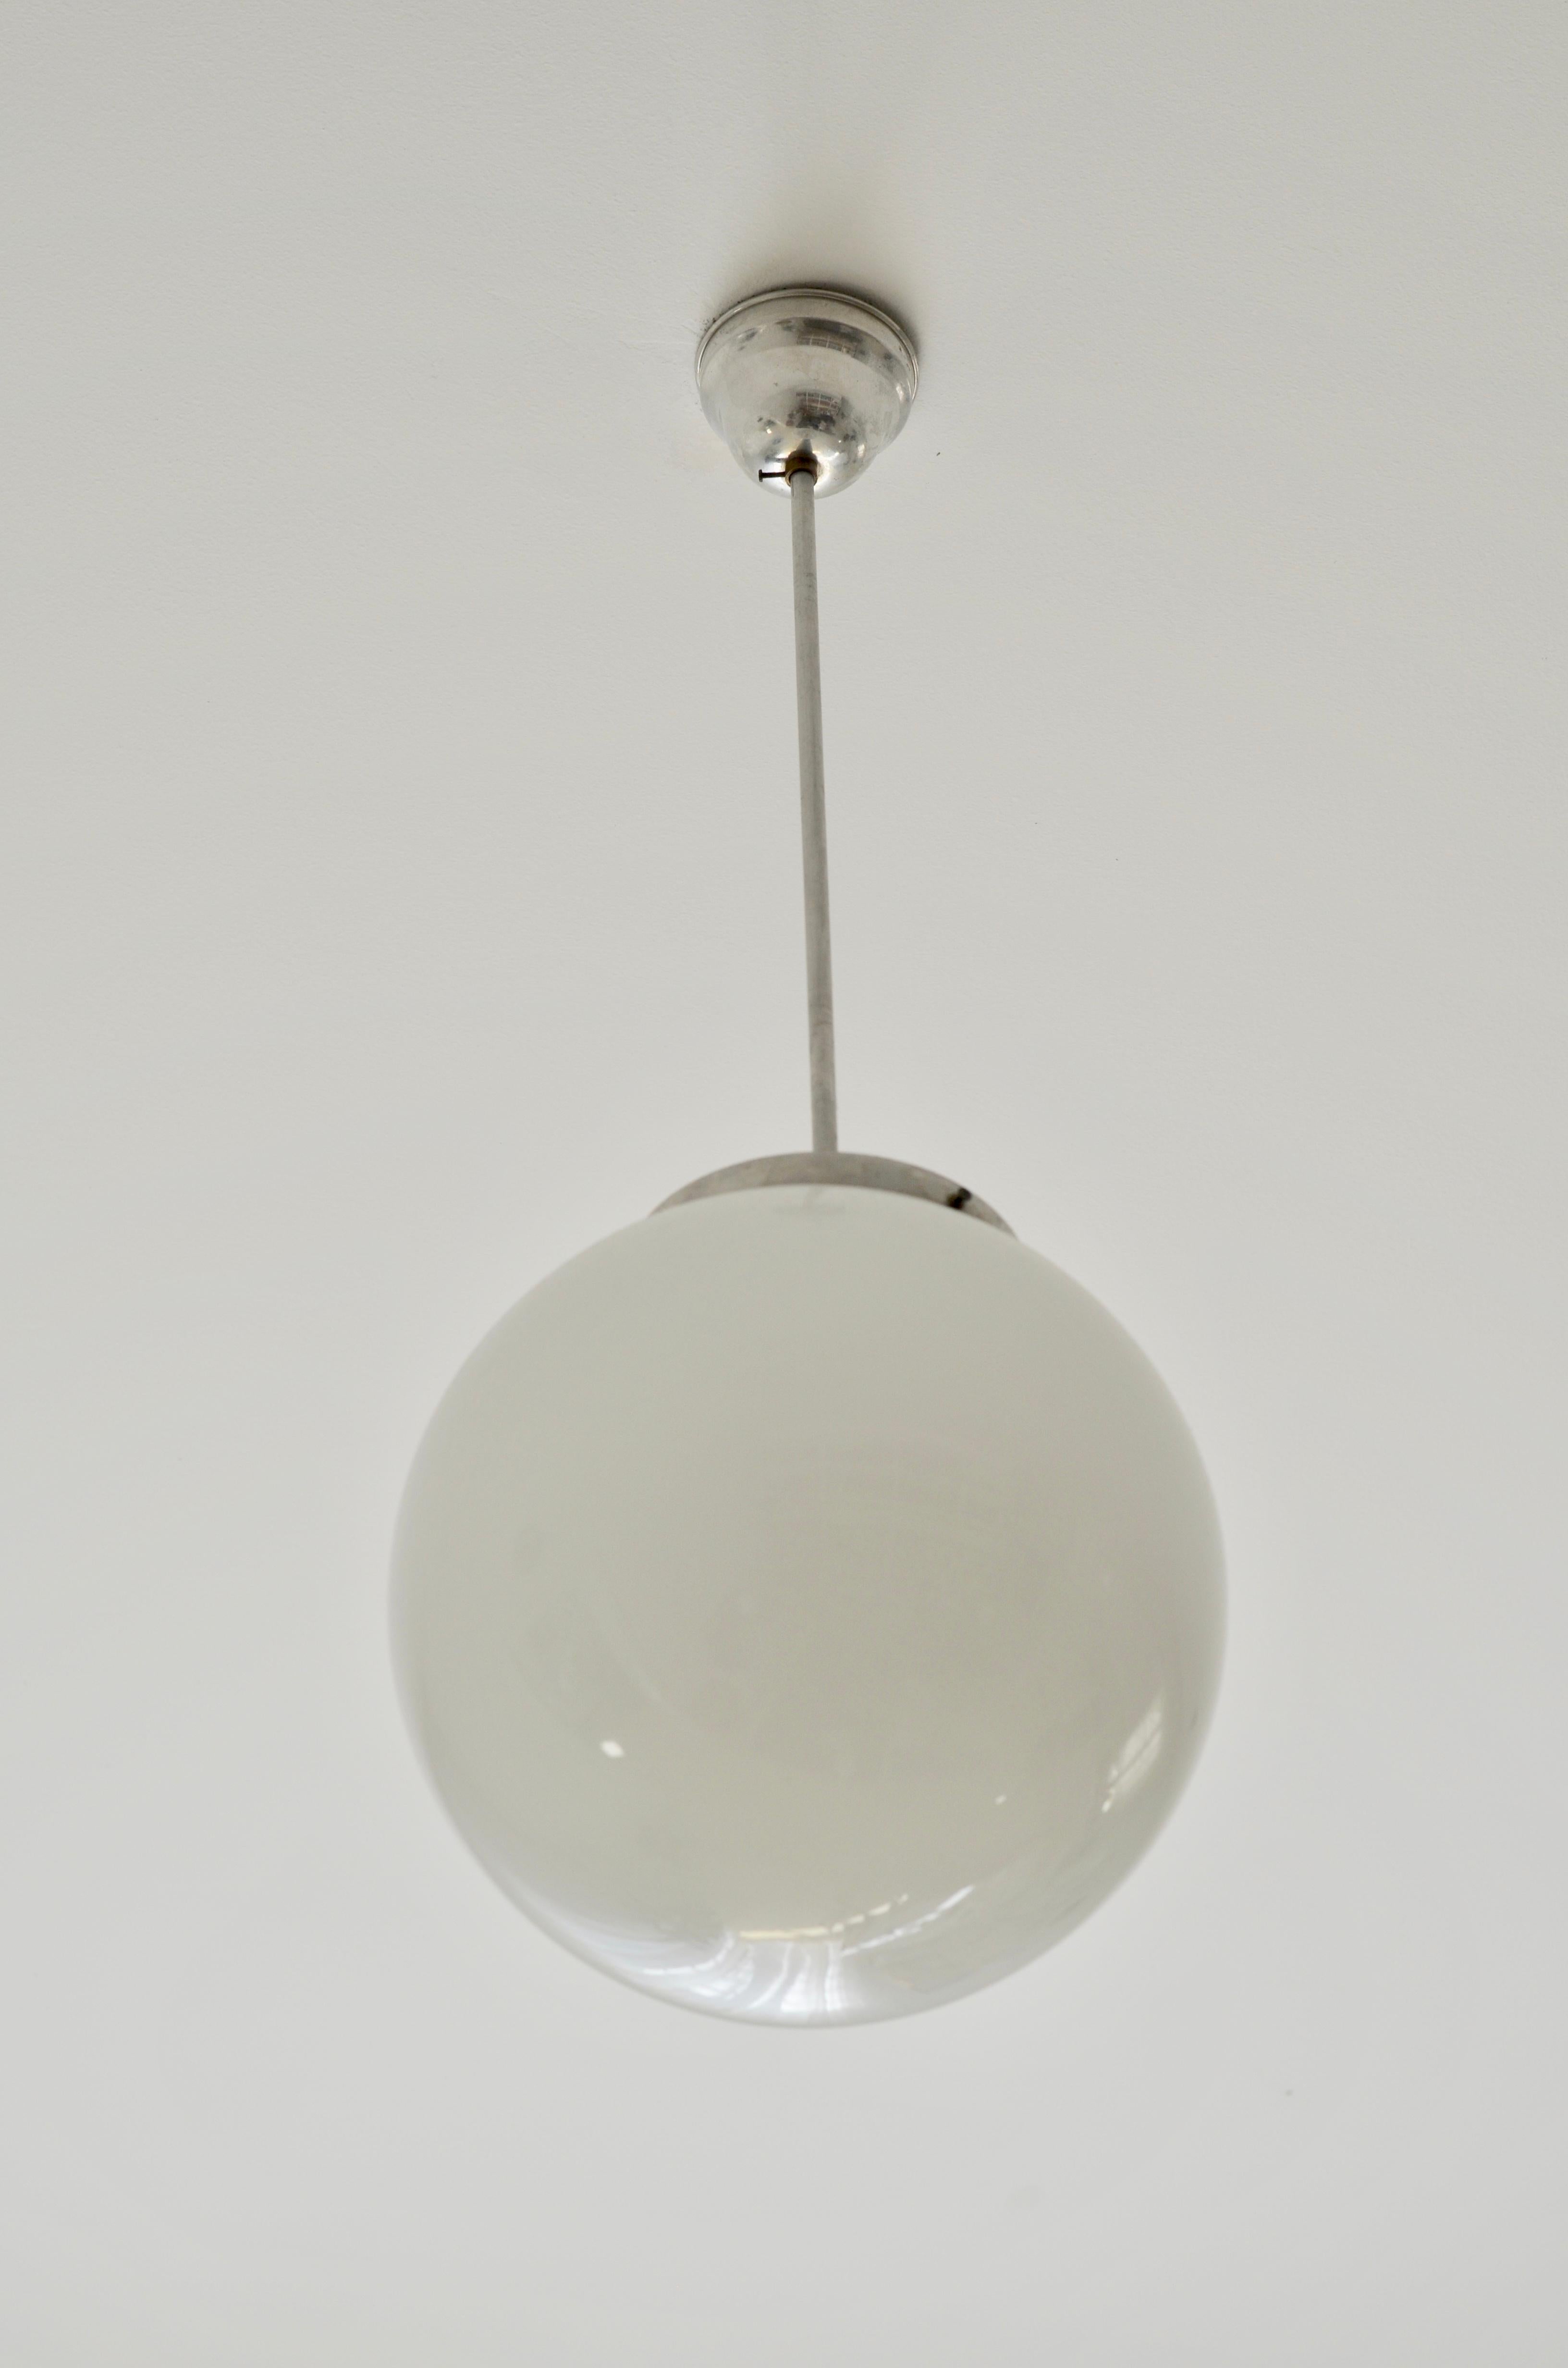 Bauhaus style pendant light.

Producer: EMI Poljcane, Slovenia, Yugoslavia.

Period of Production: 1950s.

Material: opaline glass, aluminum.

Measure: diameter: 24 cm.